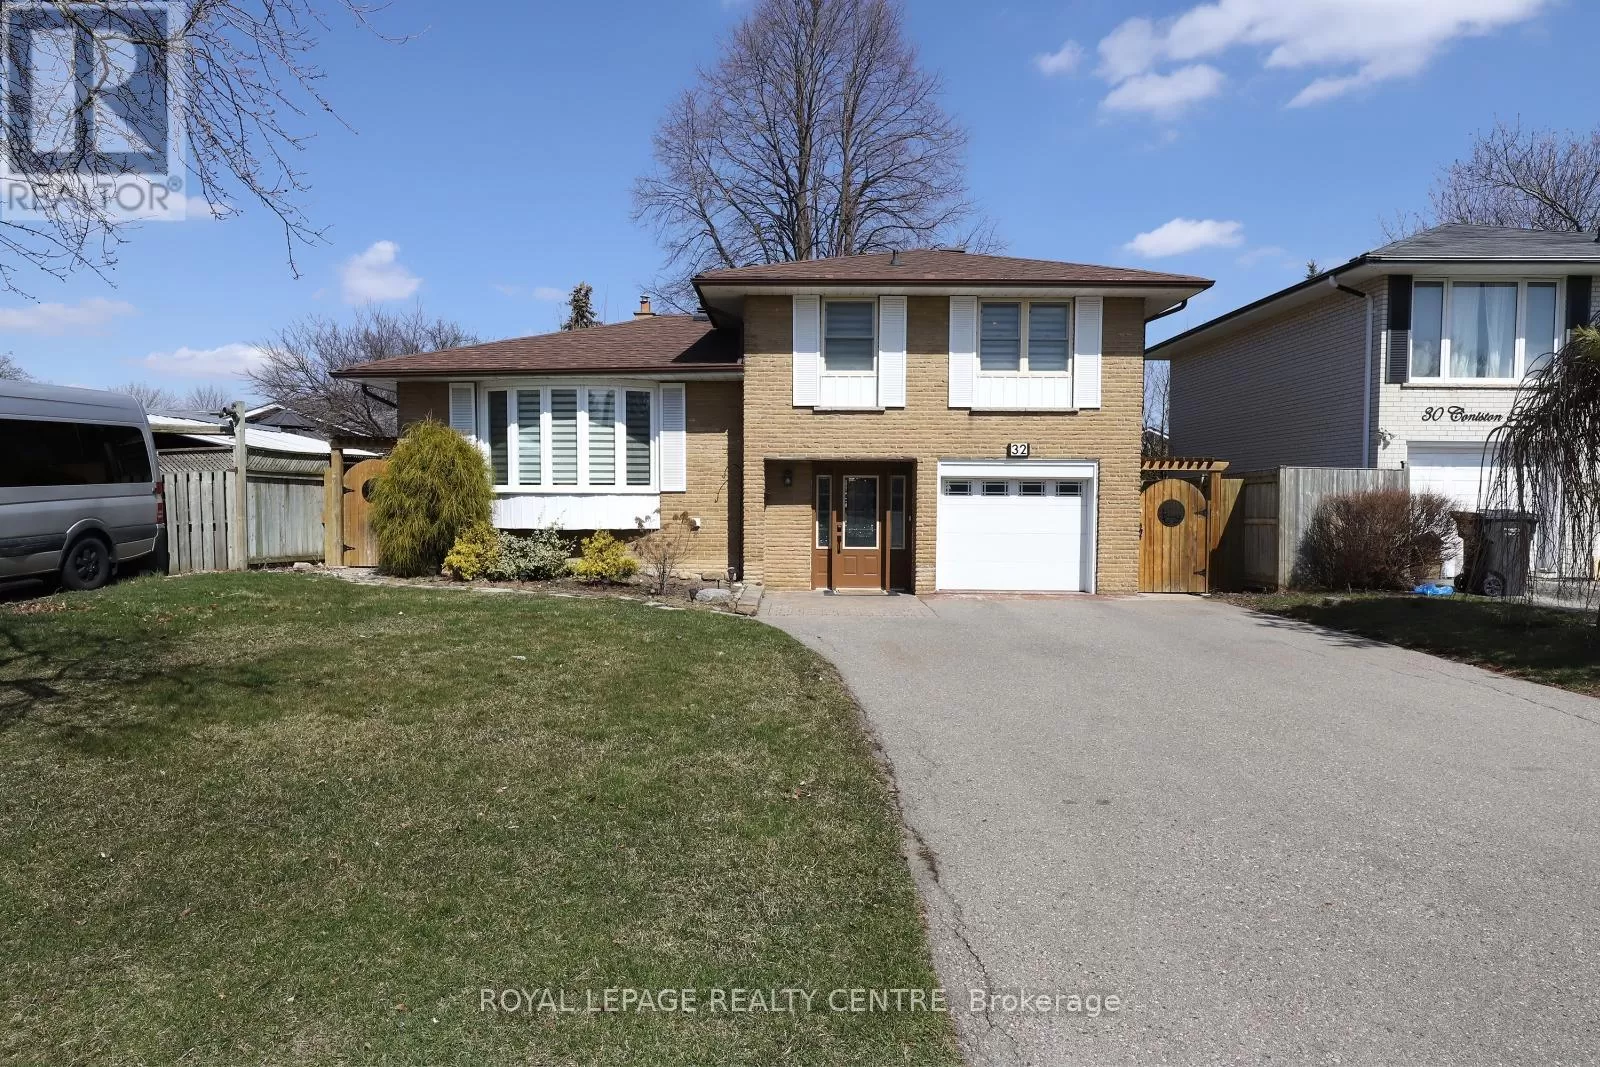 House for rent: 32 Coniston Ave, Brampton, Ontario L6X 2H4